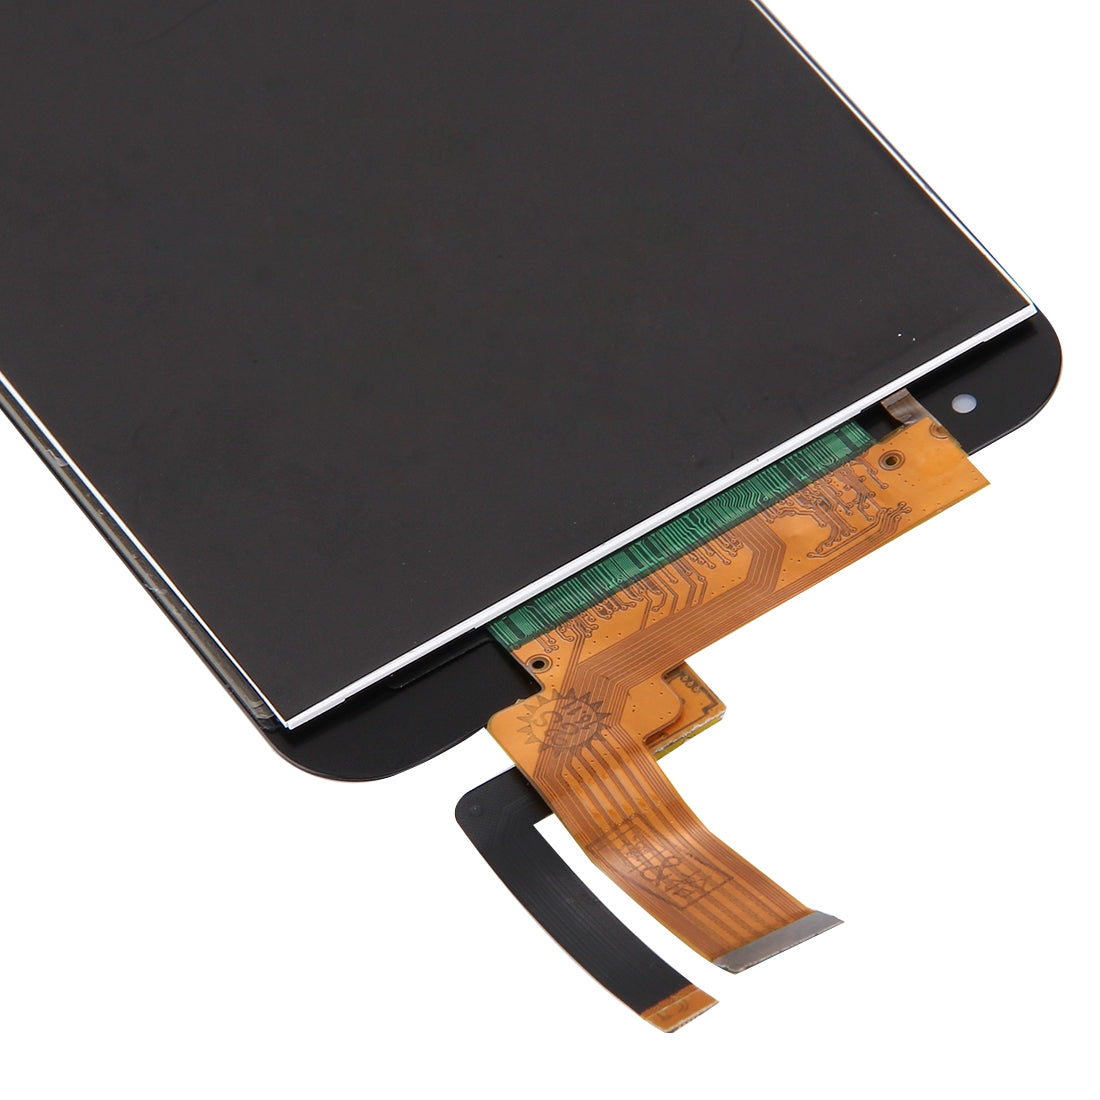 Pantalla LCD + Tactil Digitalizador Meizu M1 Note Negro